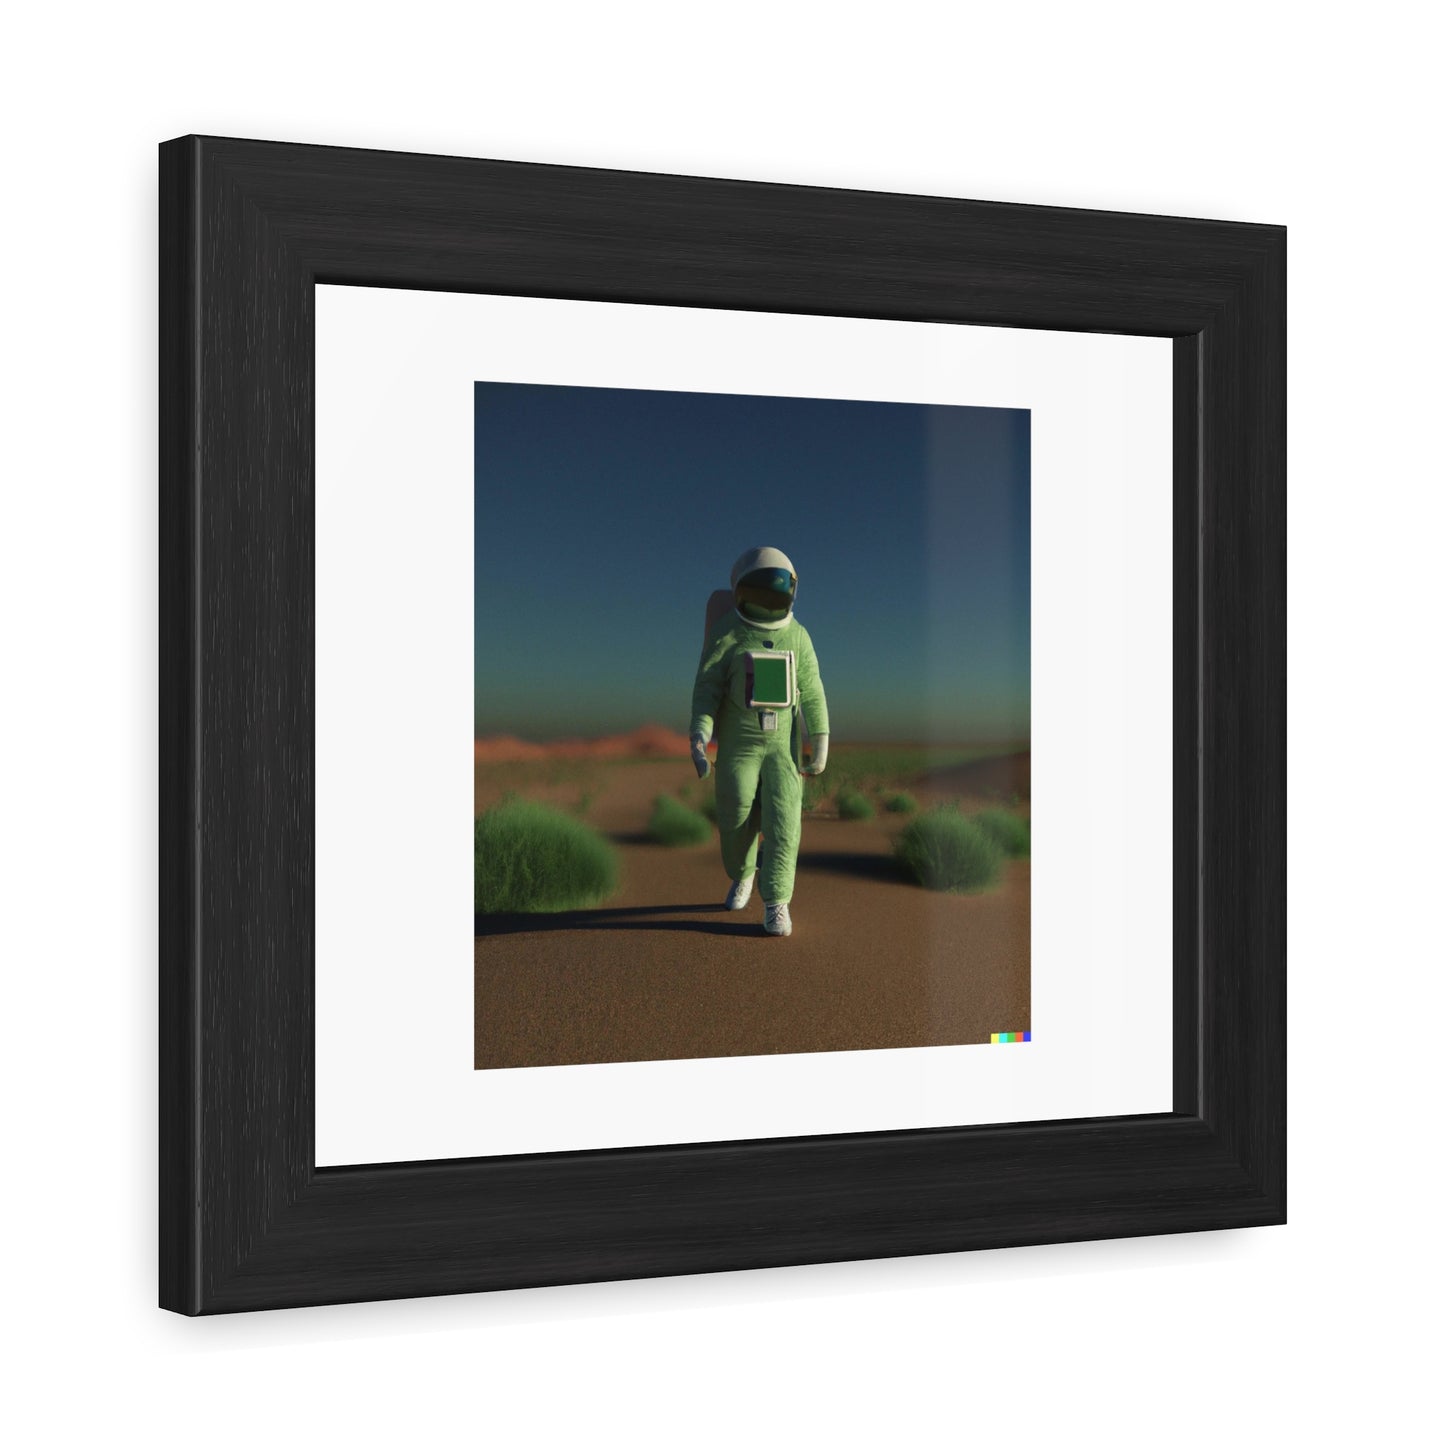 3D Render Of An Astronaut Walking In A Green Desert 'Designed by AI' Wooden Framed Print